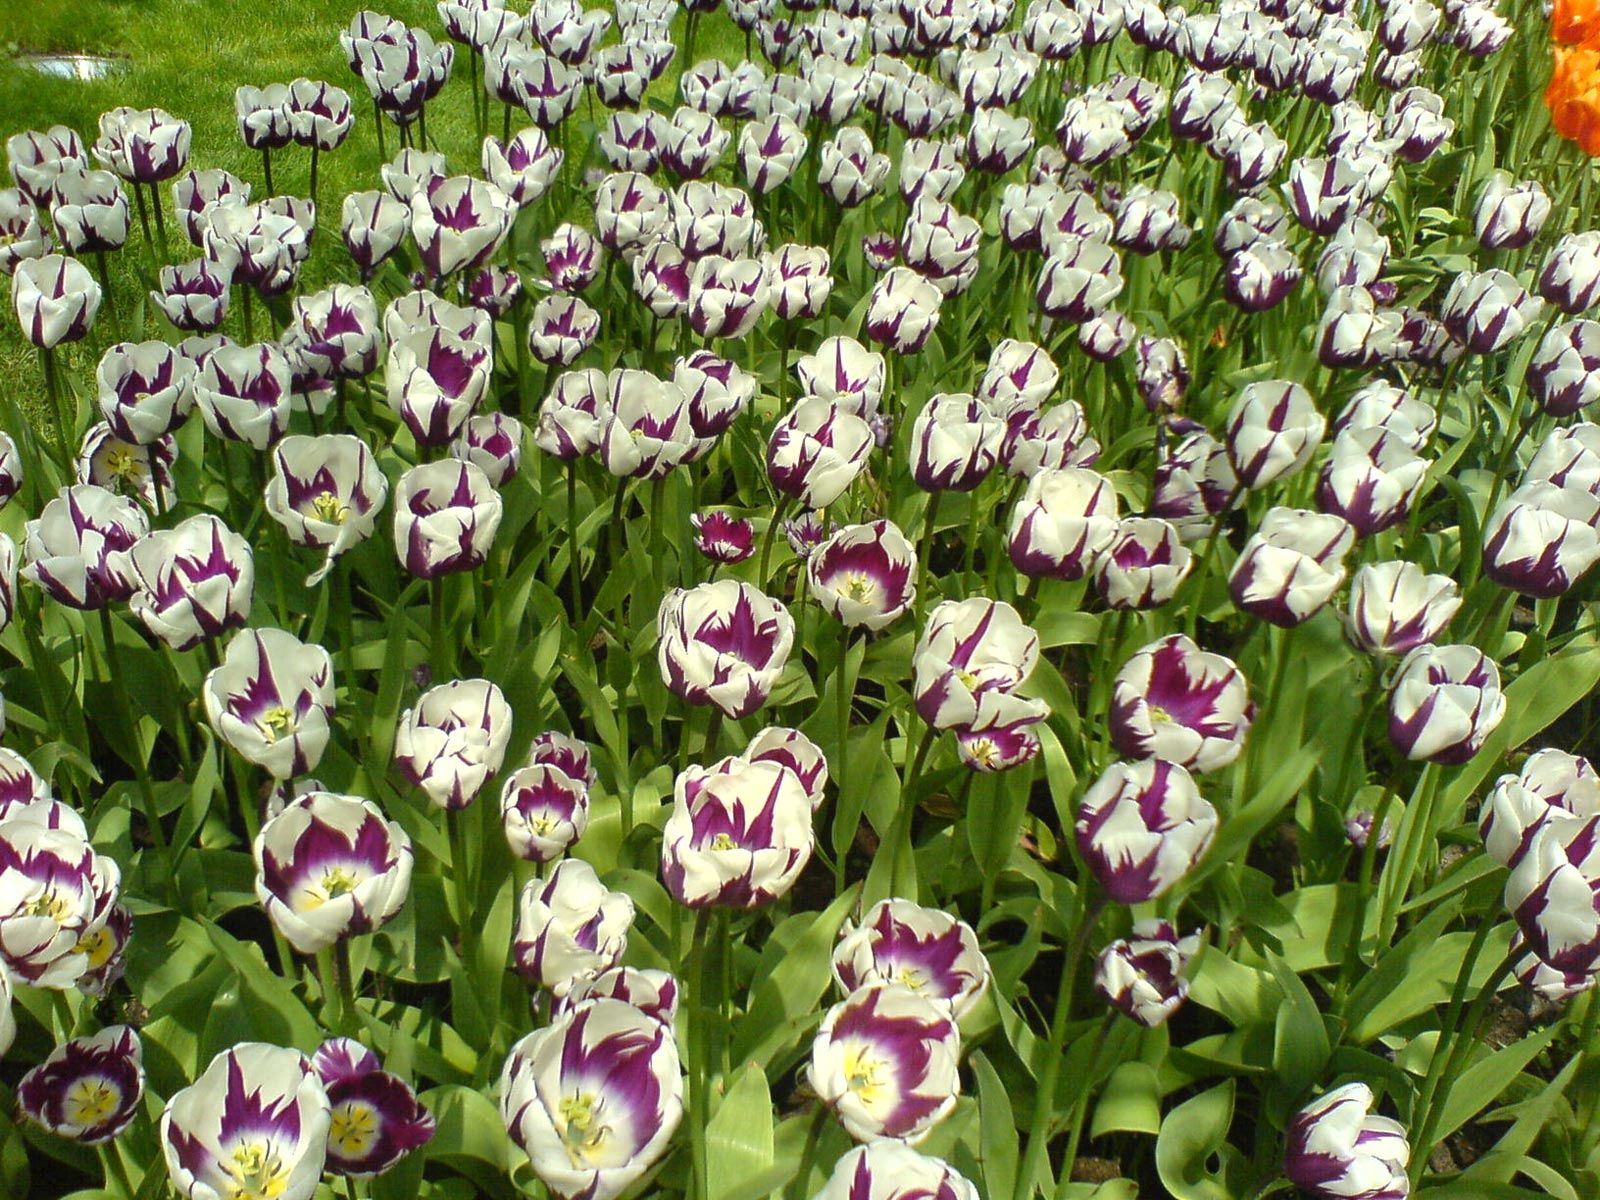 flower bed, flowerbed, flowers, tulips, park, disbanded, loose, lawn, variegated, mottled